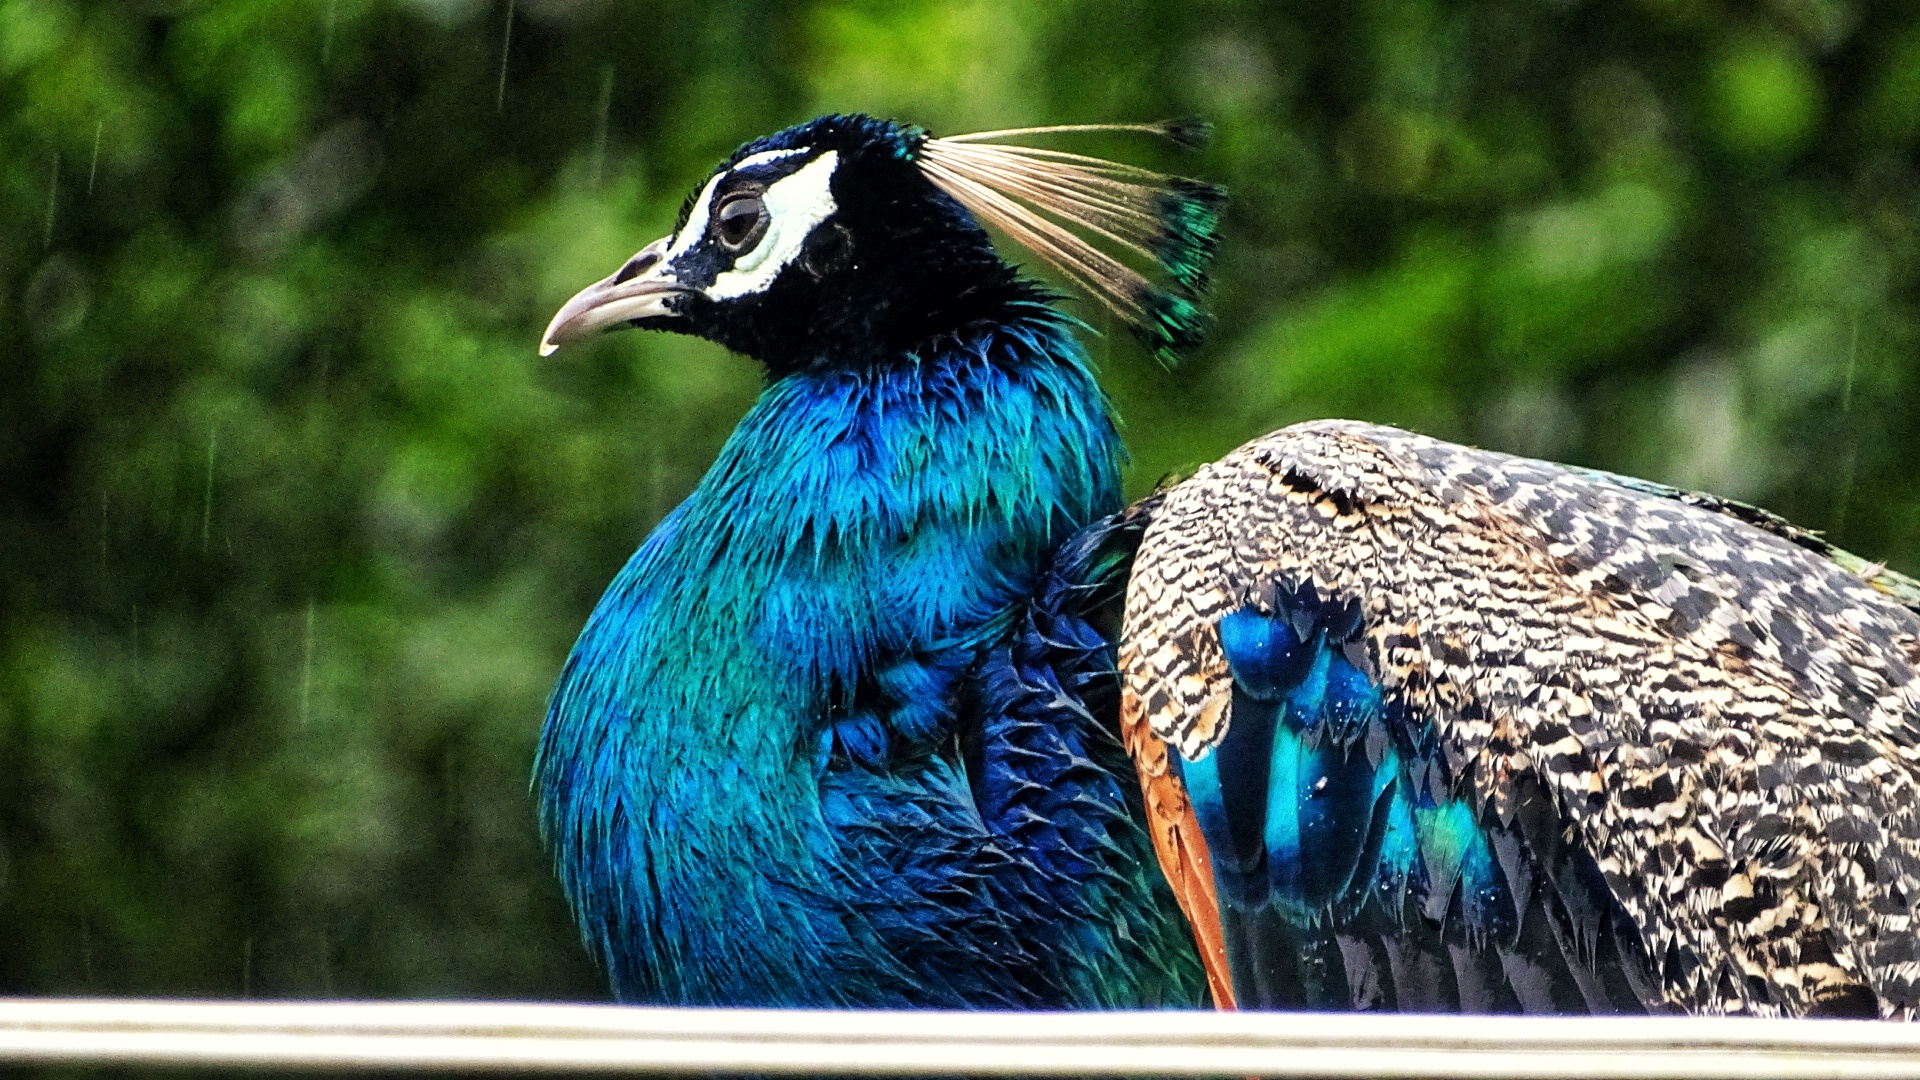 Peacock @Tea Estate